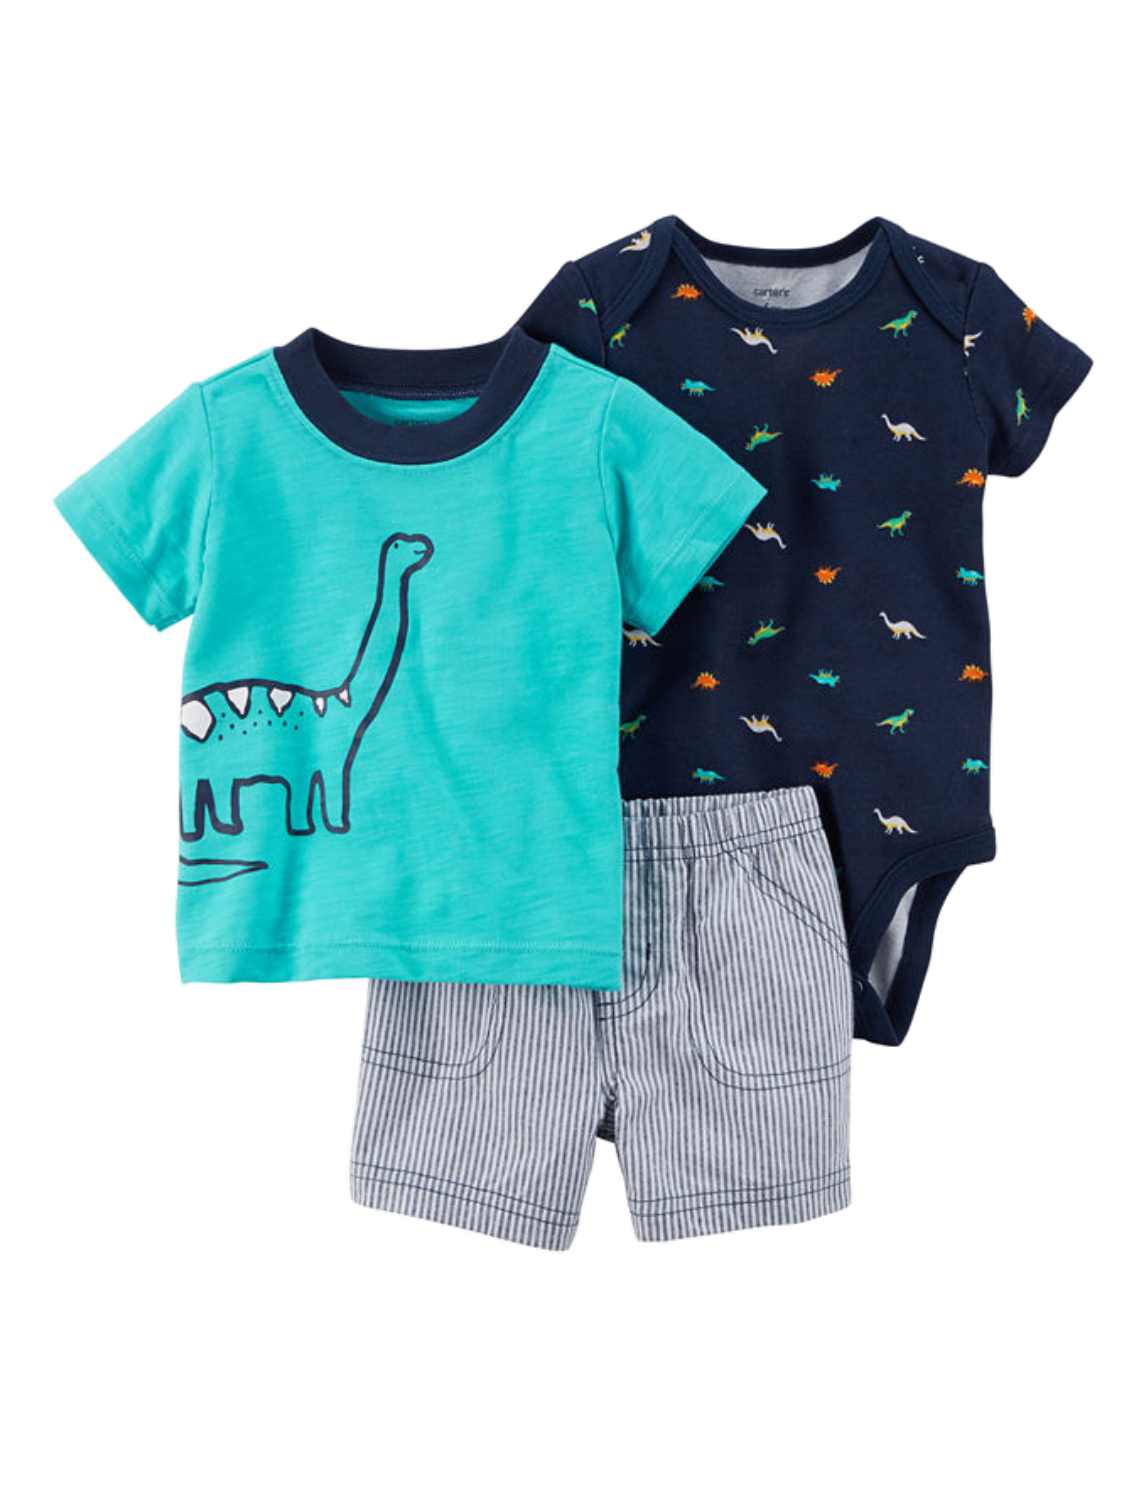 Carter's Carters Infant Boys Dinosaur Brontosaurus Baby Outfits Shirt ...